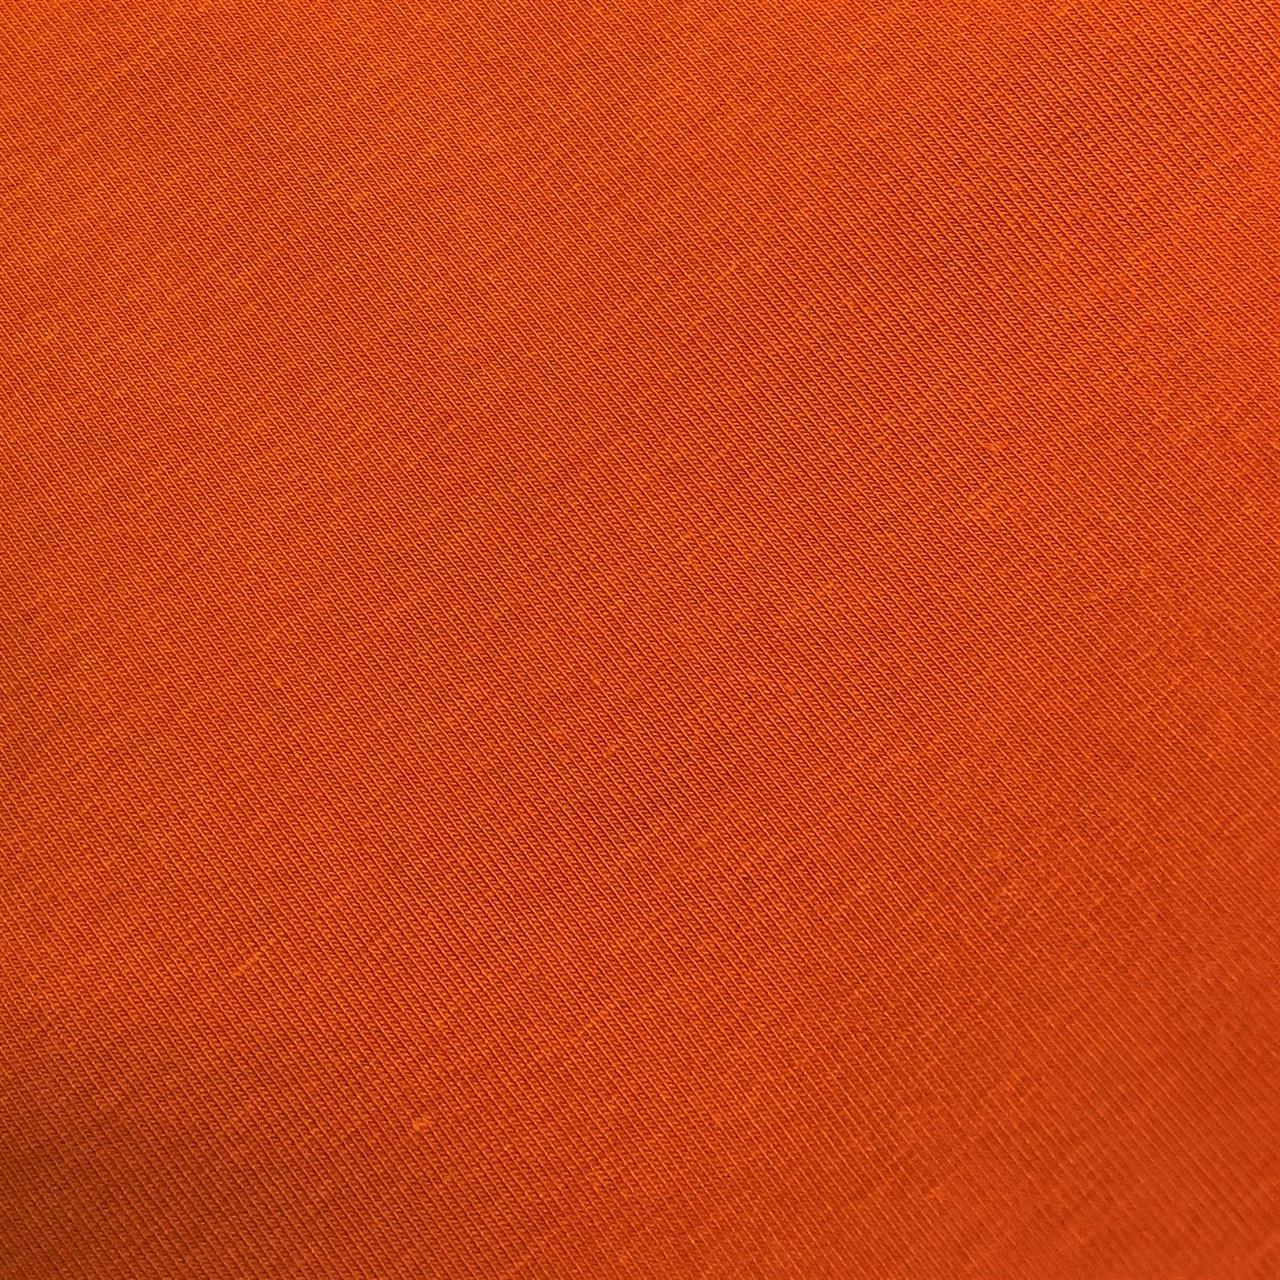 Jersey orange 0861-07